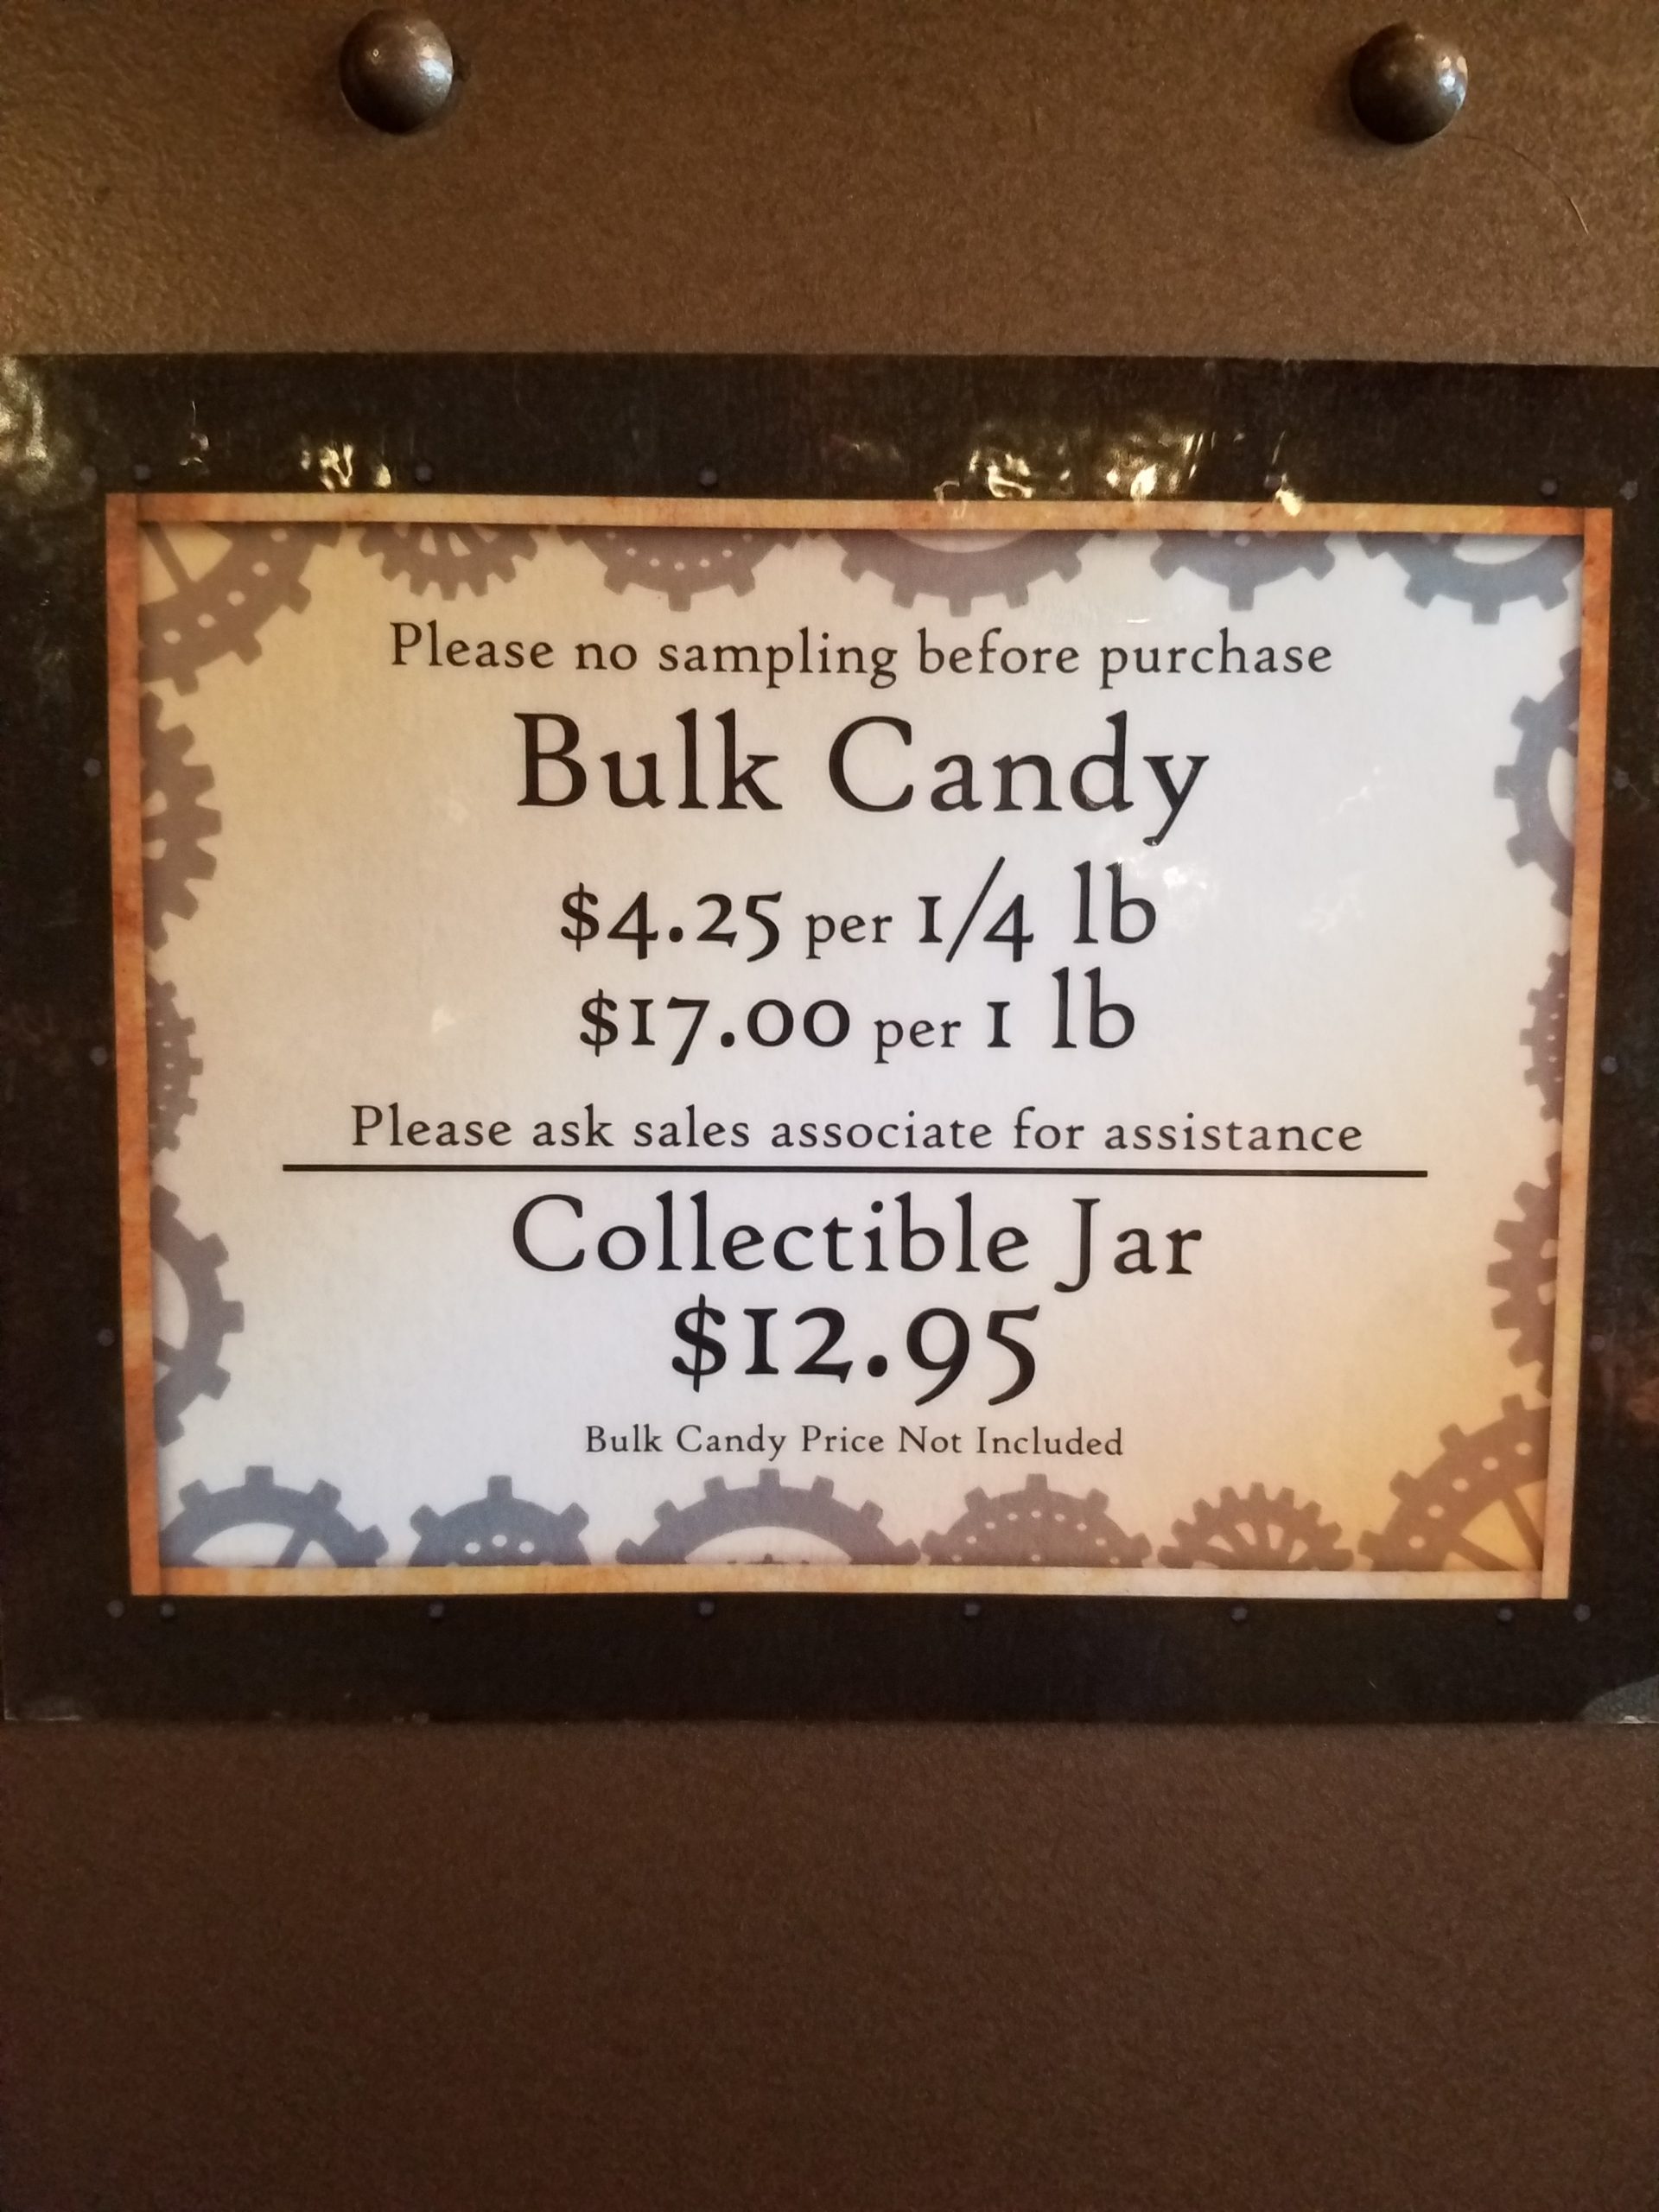 Bulk candy pricing